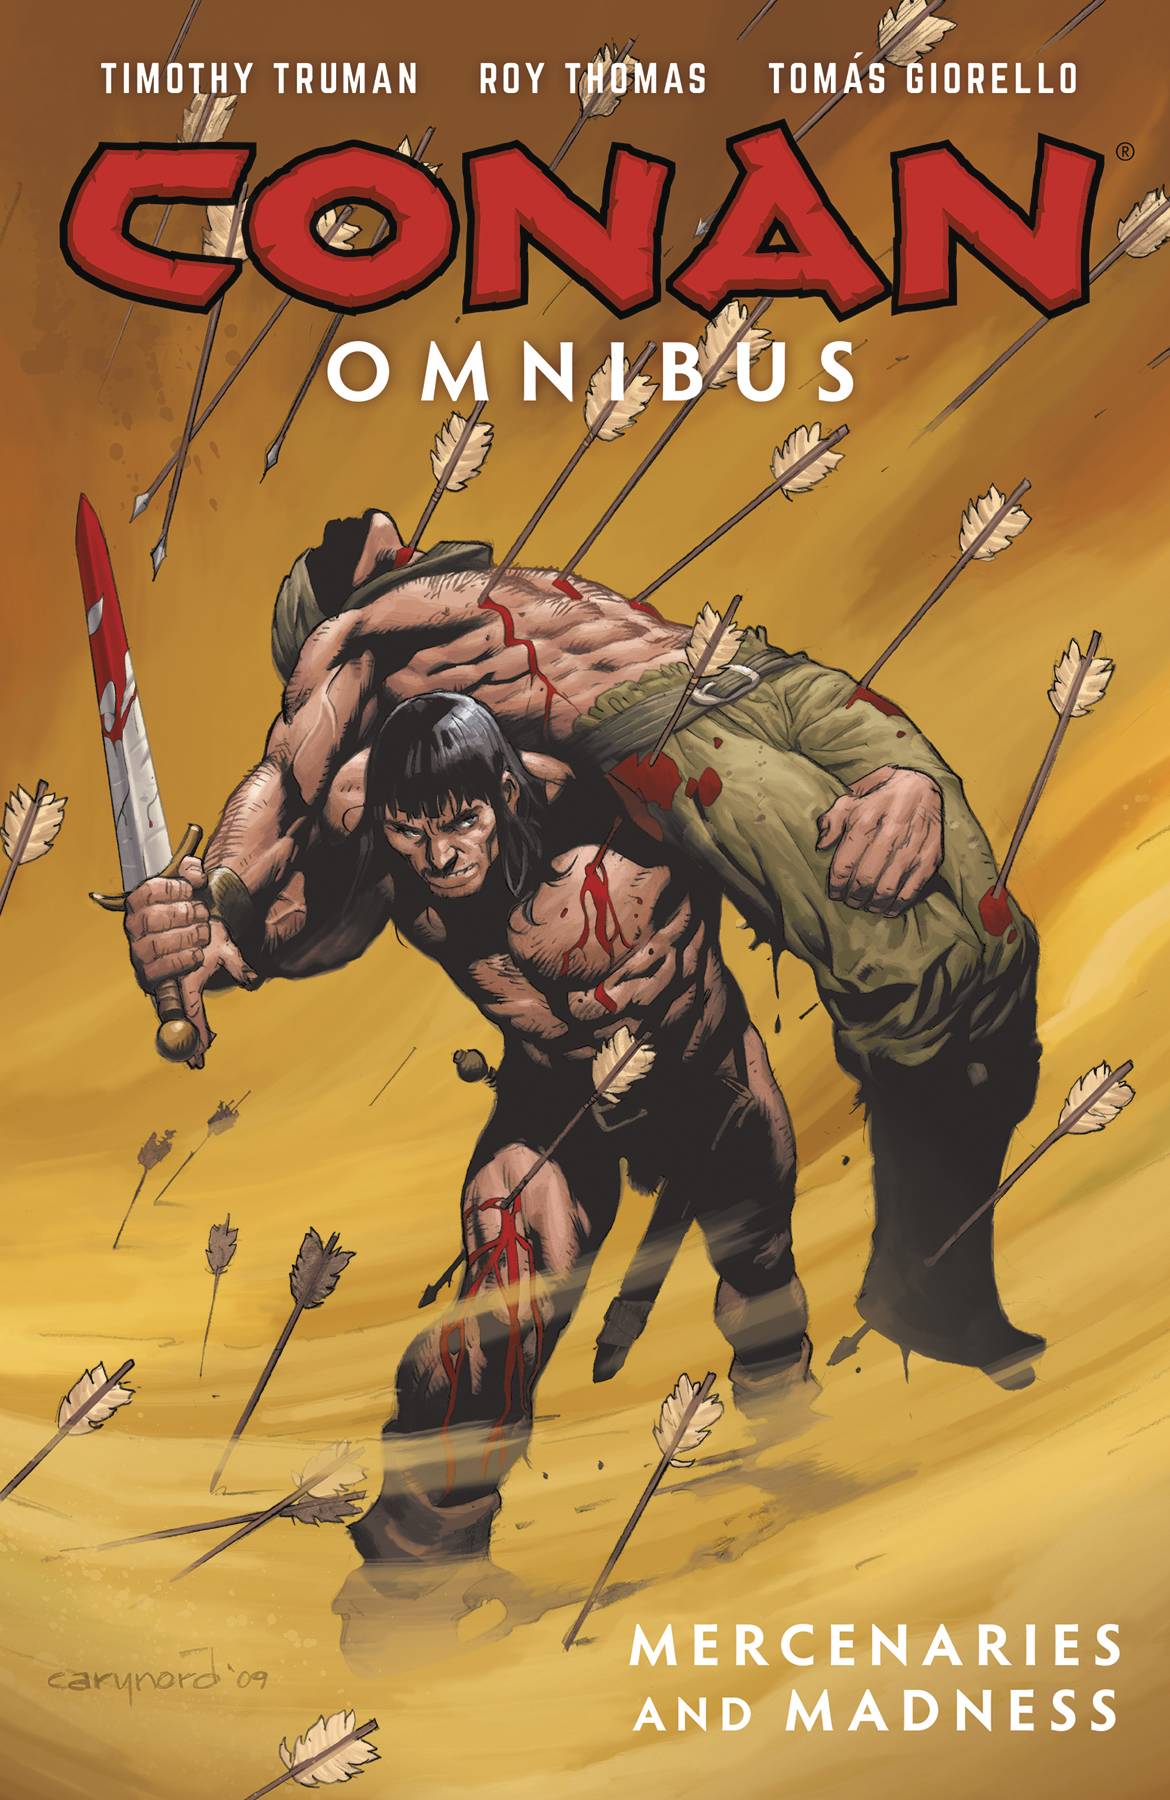 Conan Omnibus Graphic Novel Volume 4